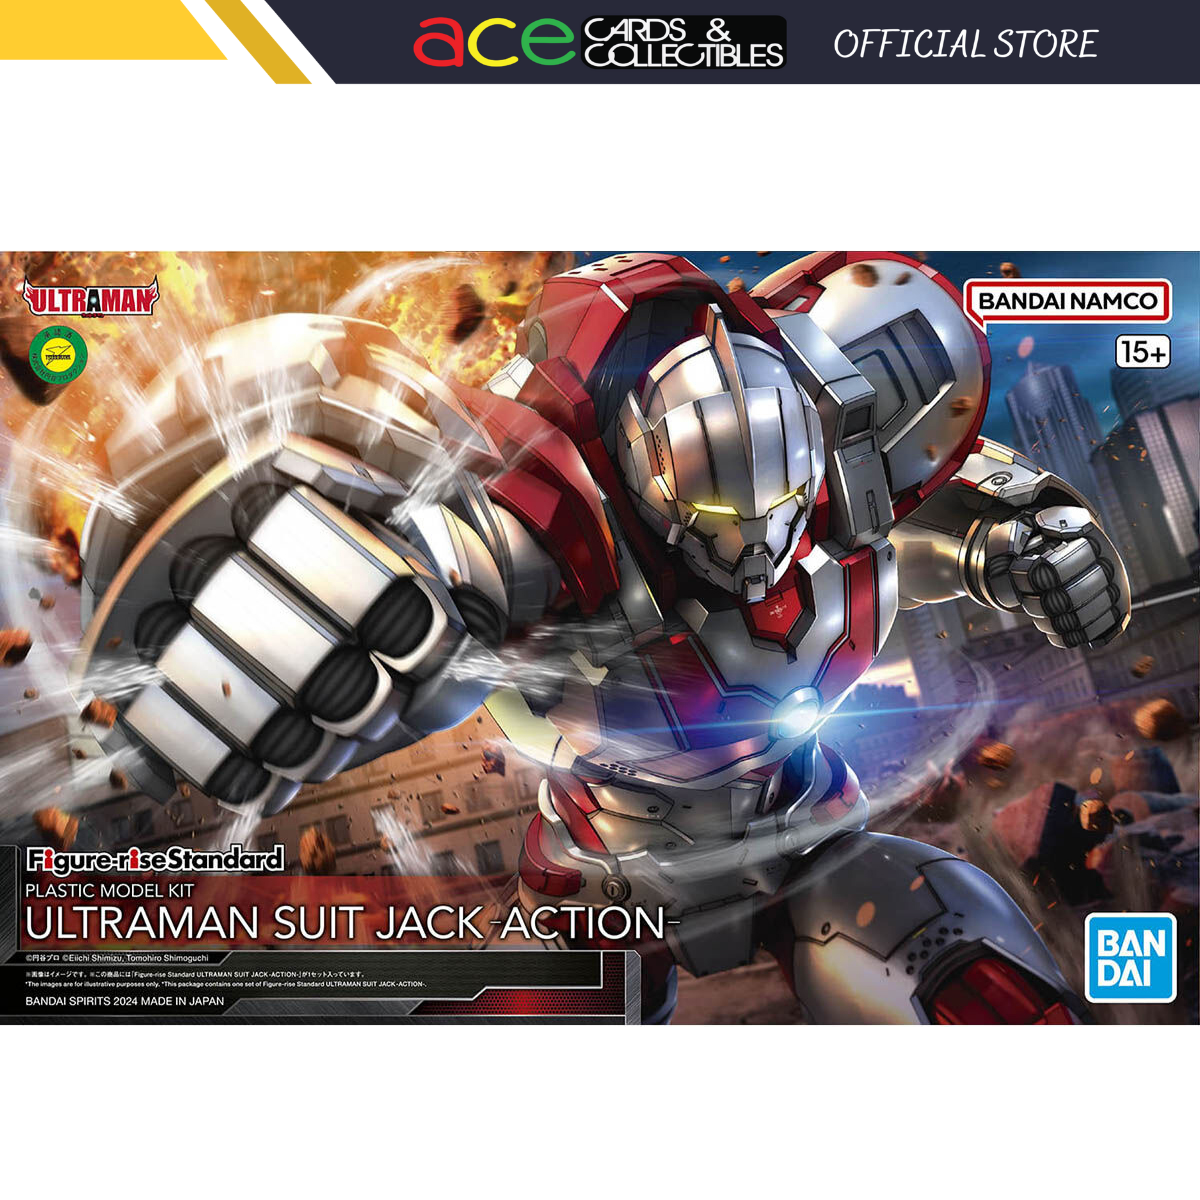 Ultraman Figure-rise Standard Ultraman Suit Jack Action-Bandai-Ace Cards & Collectibles